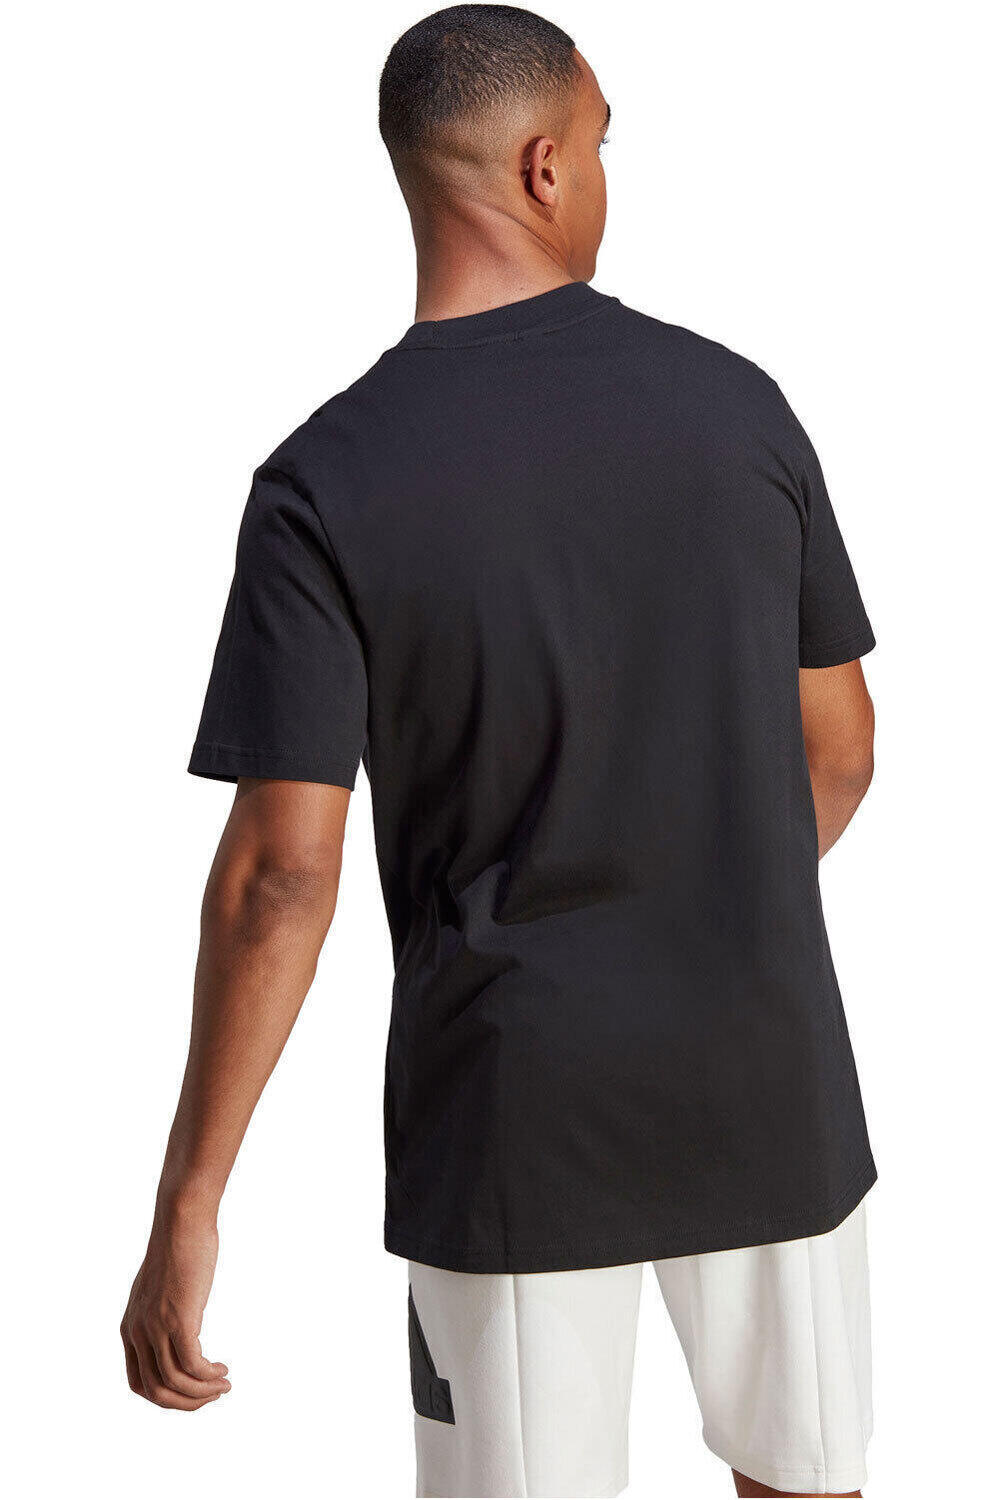 Adidas Future Icons Badge of Sports T-Shirt Men (IC3709) black-white - Camisetas hombre